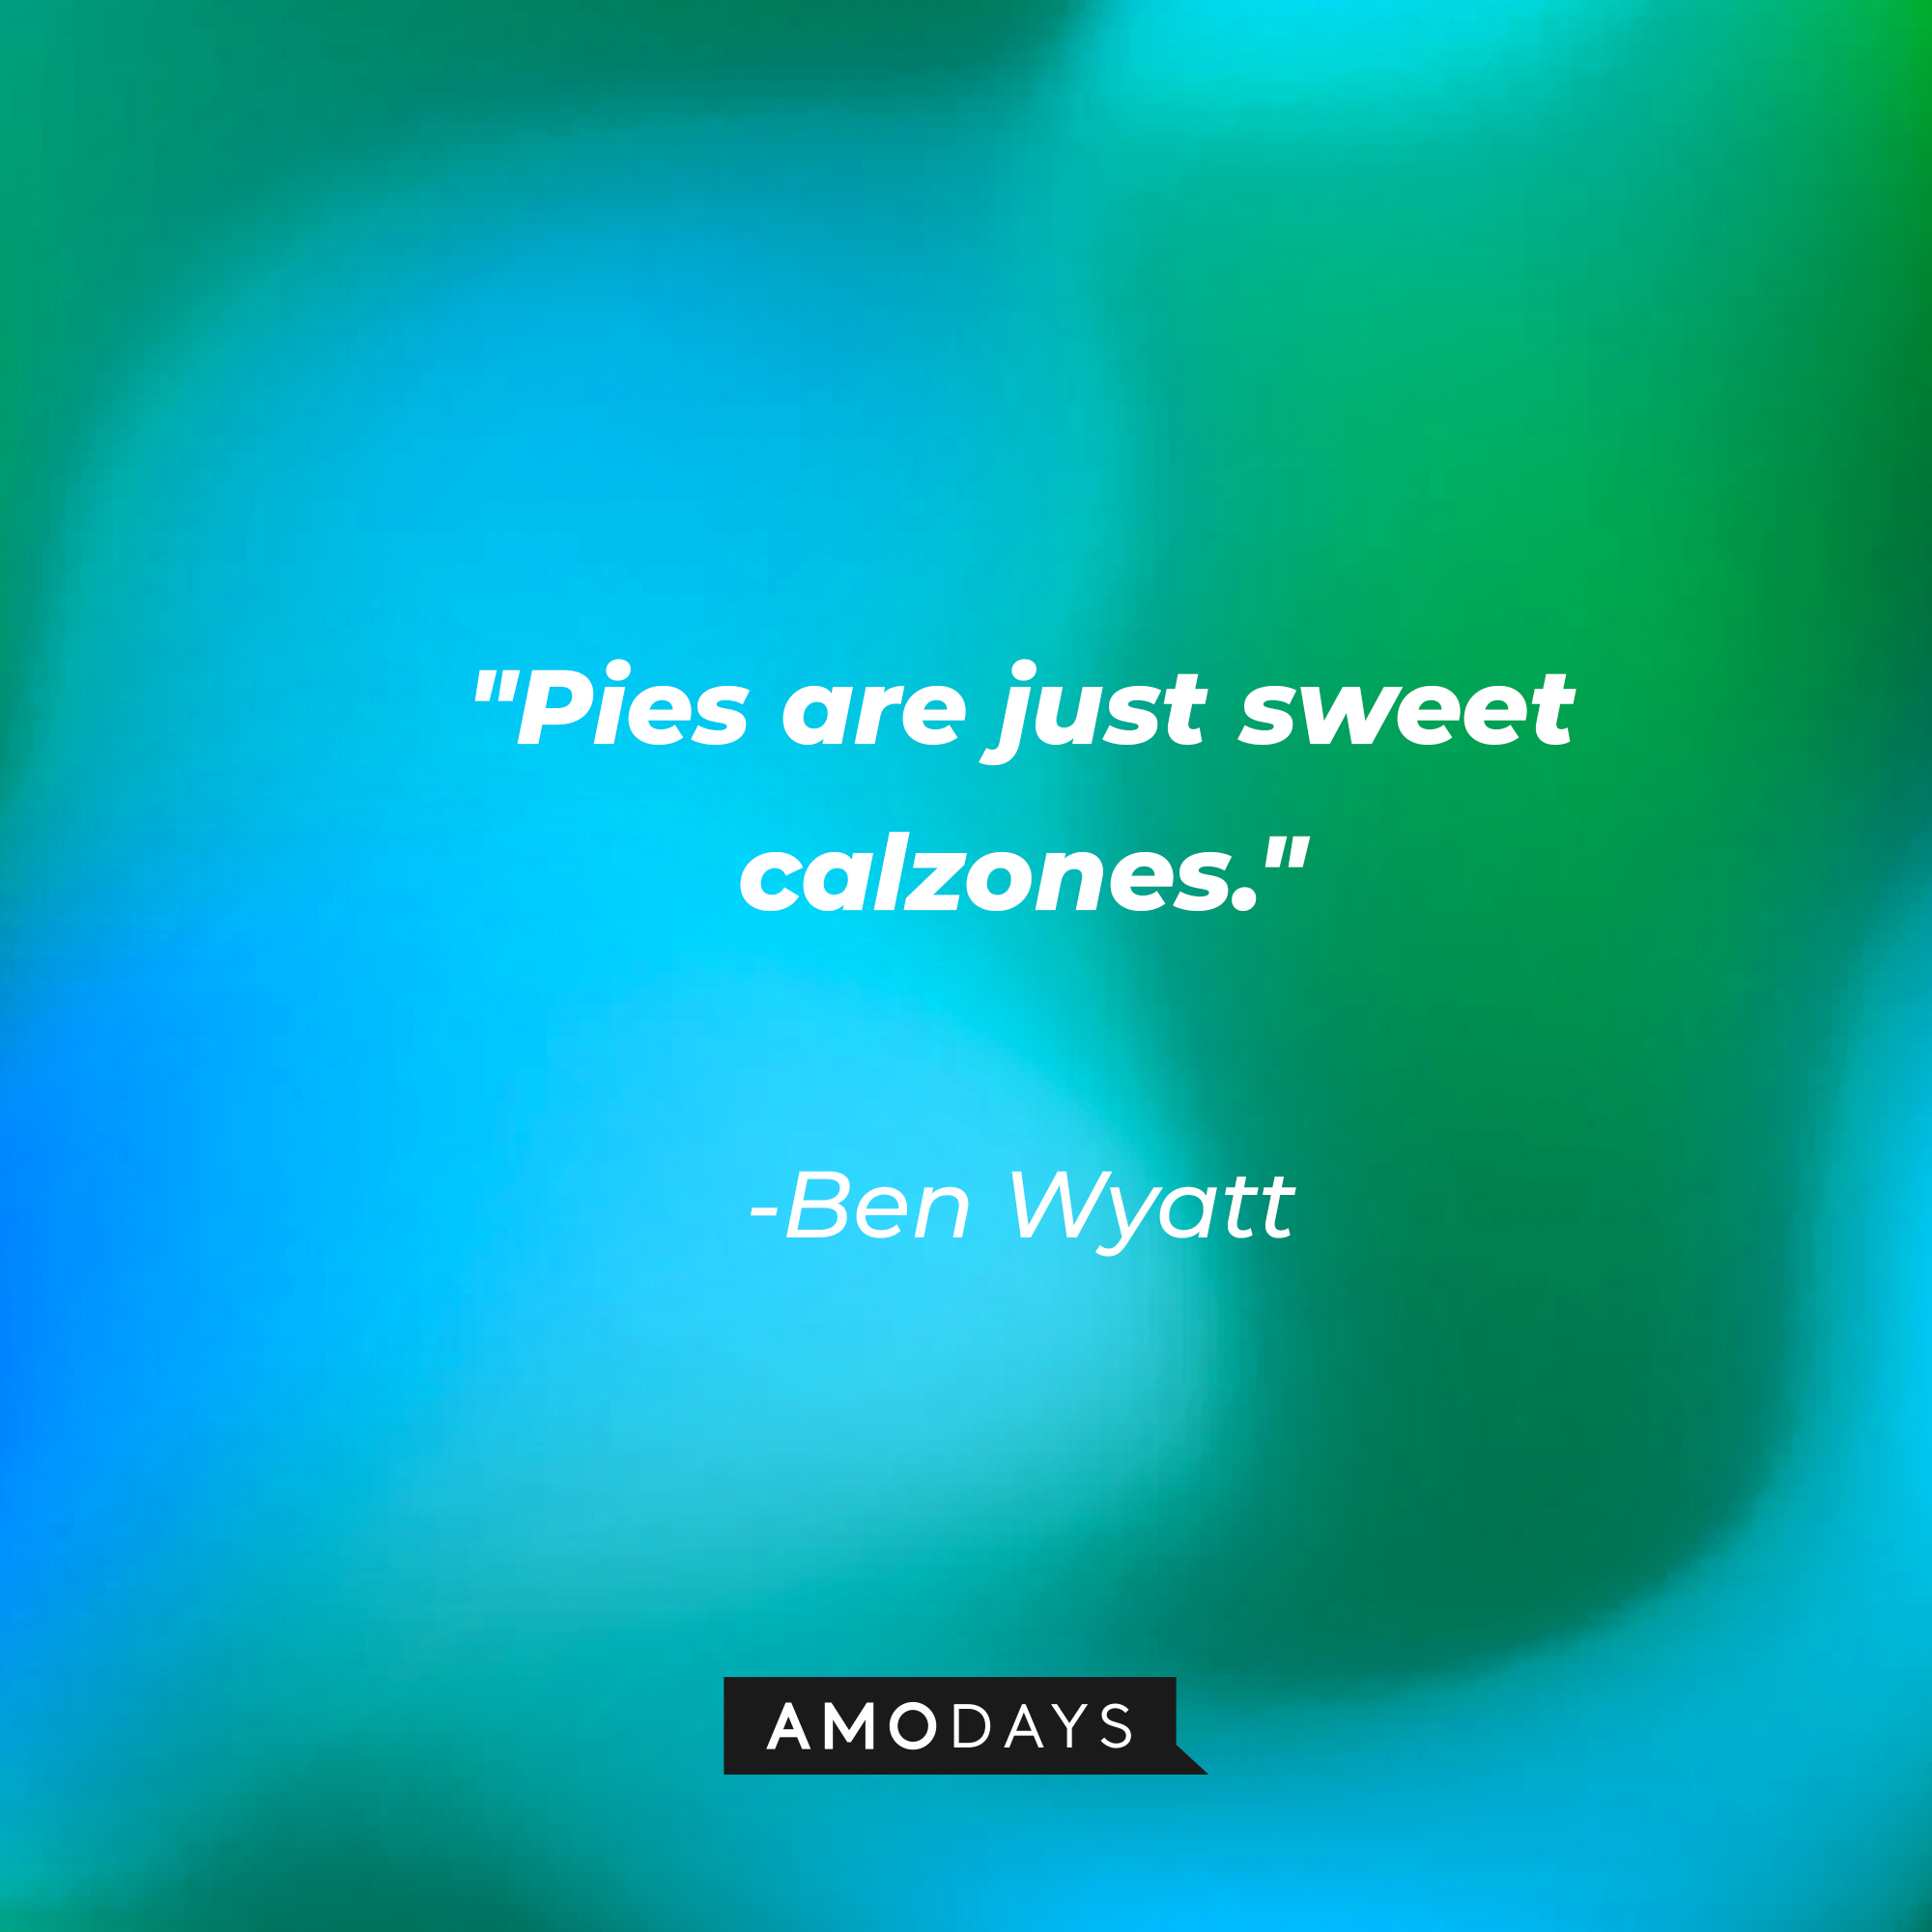 Ben Wyatt's quote: "Pies are just sweet calzones." | Source: AmoDays